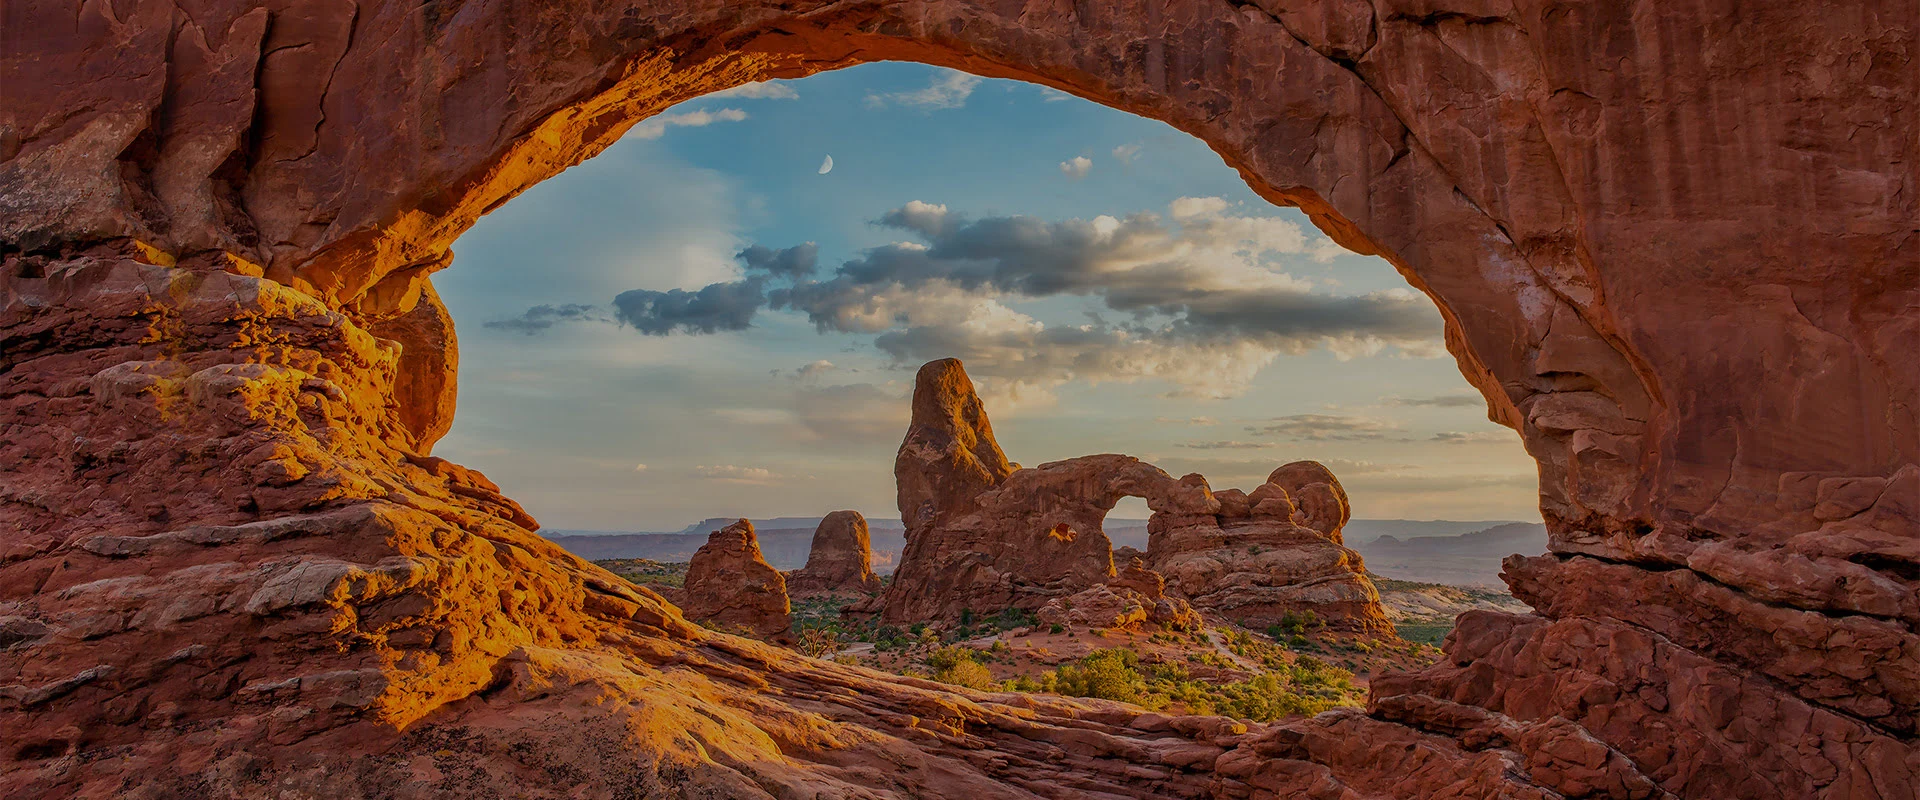 Red Rock Arch in Utah